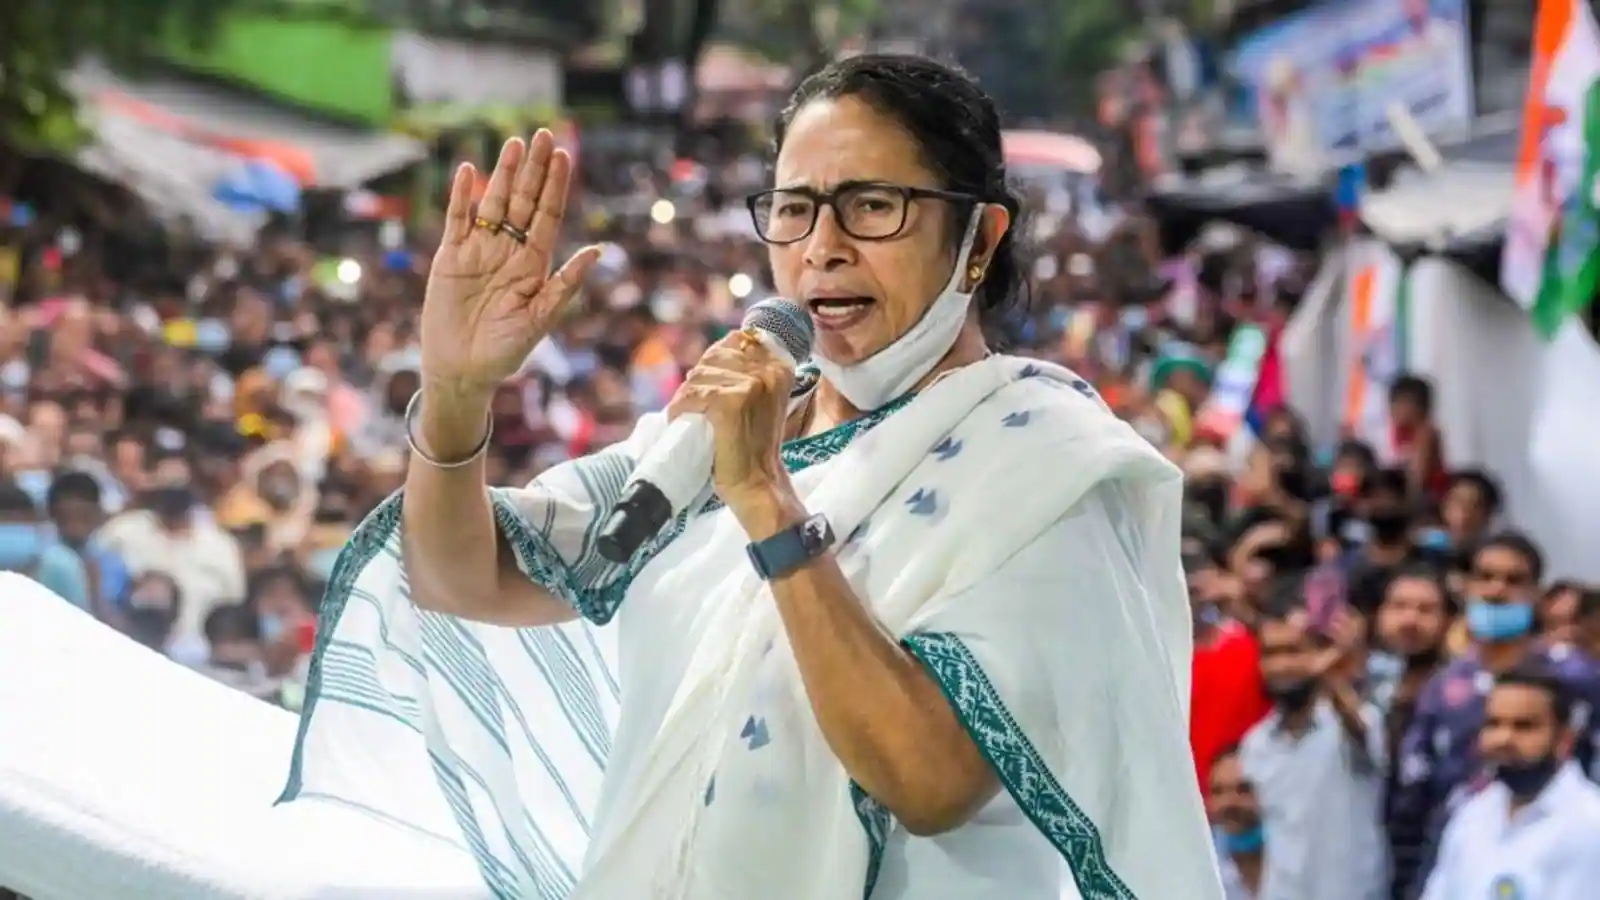 UP Election: अखिलेश का हाथ थाम पीएम मोदी को टक्कर देने चलीं ममता बनर्जी, अगले महीने वाराणसी का दौरा